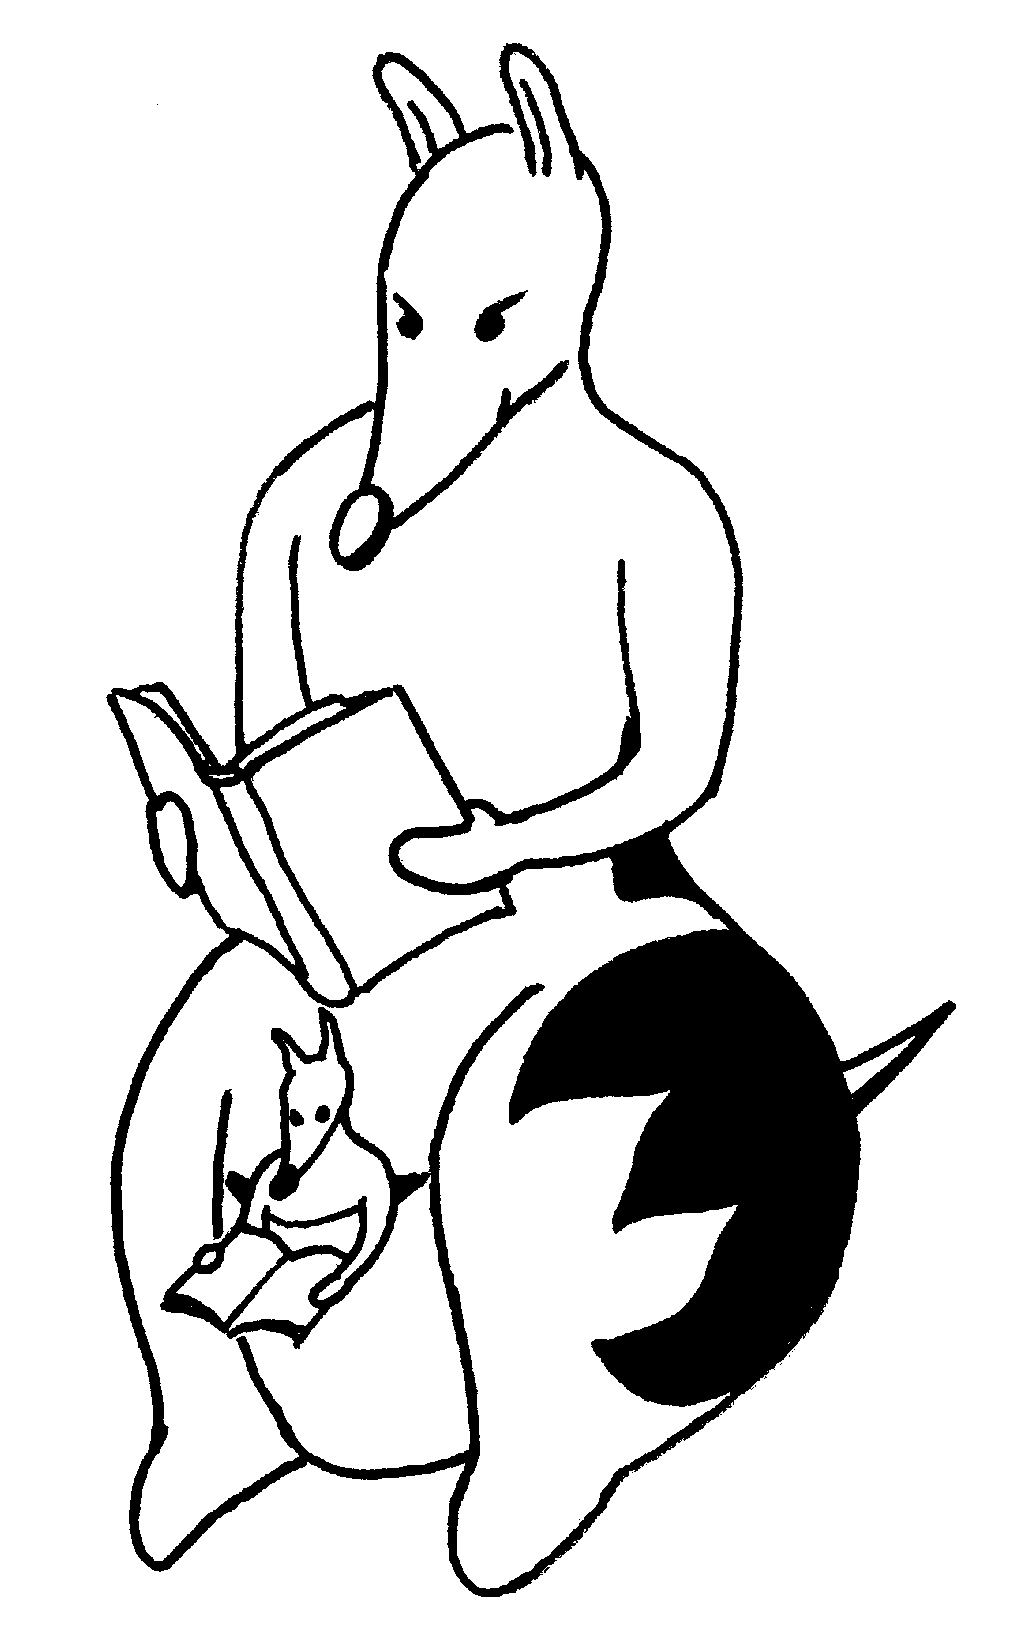 Kangaroo and Joey reading